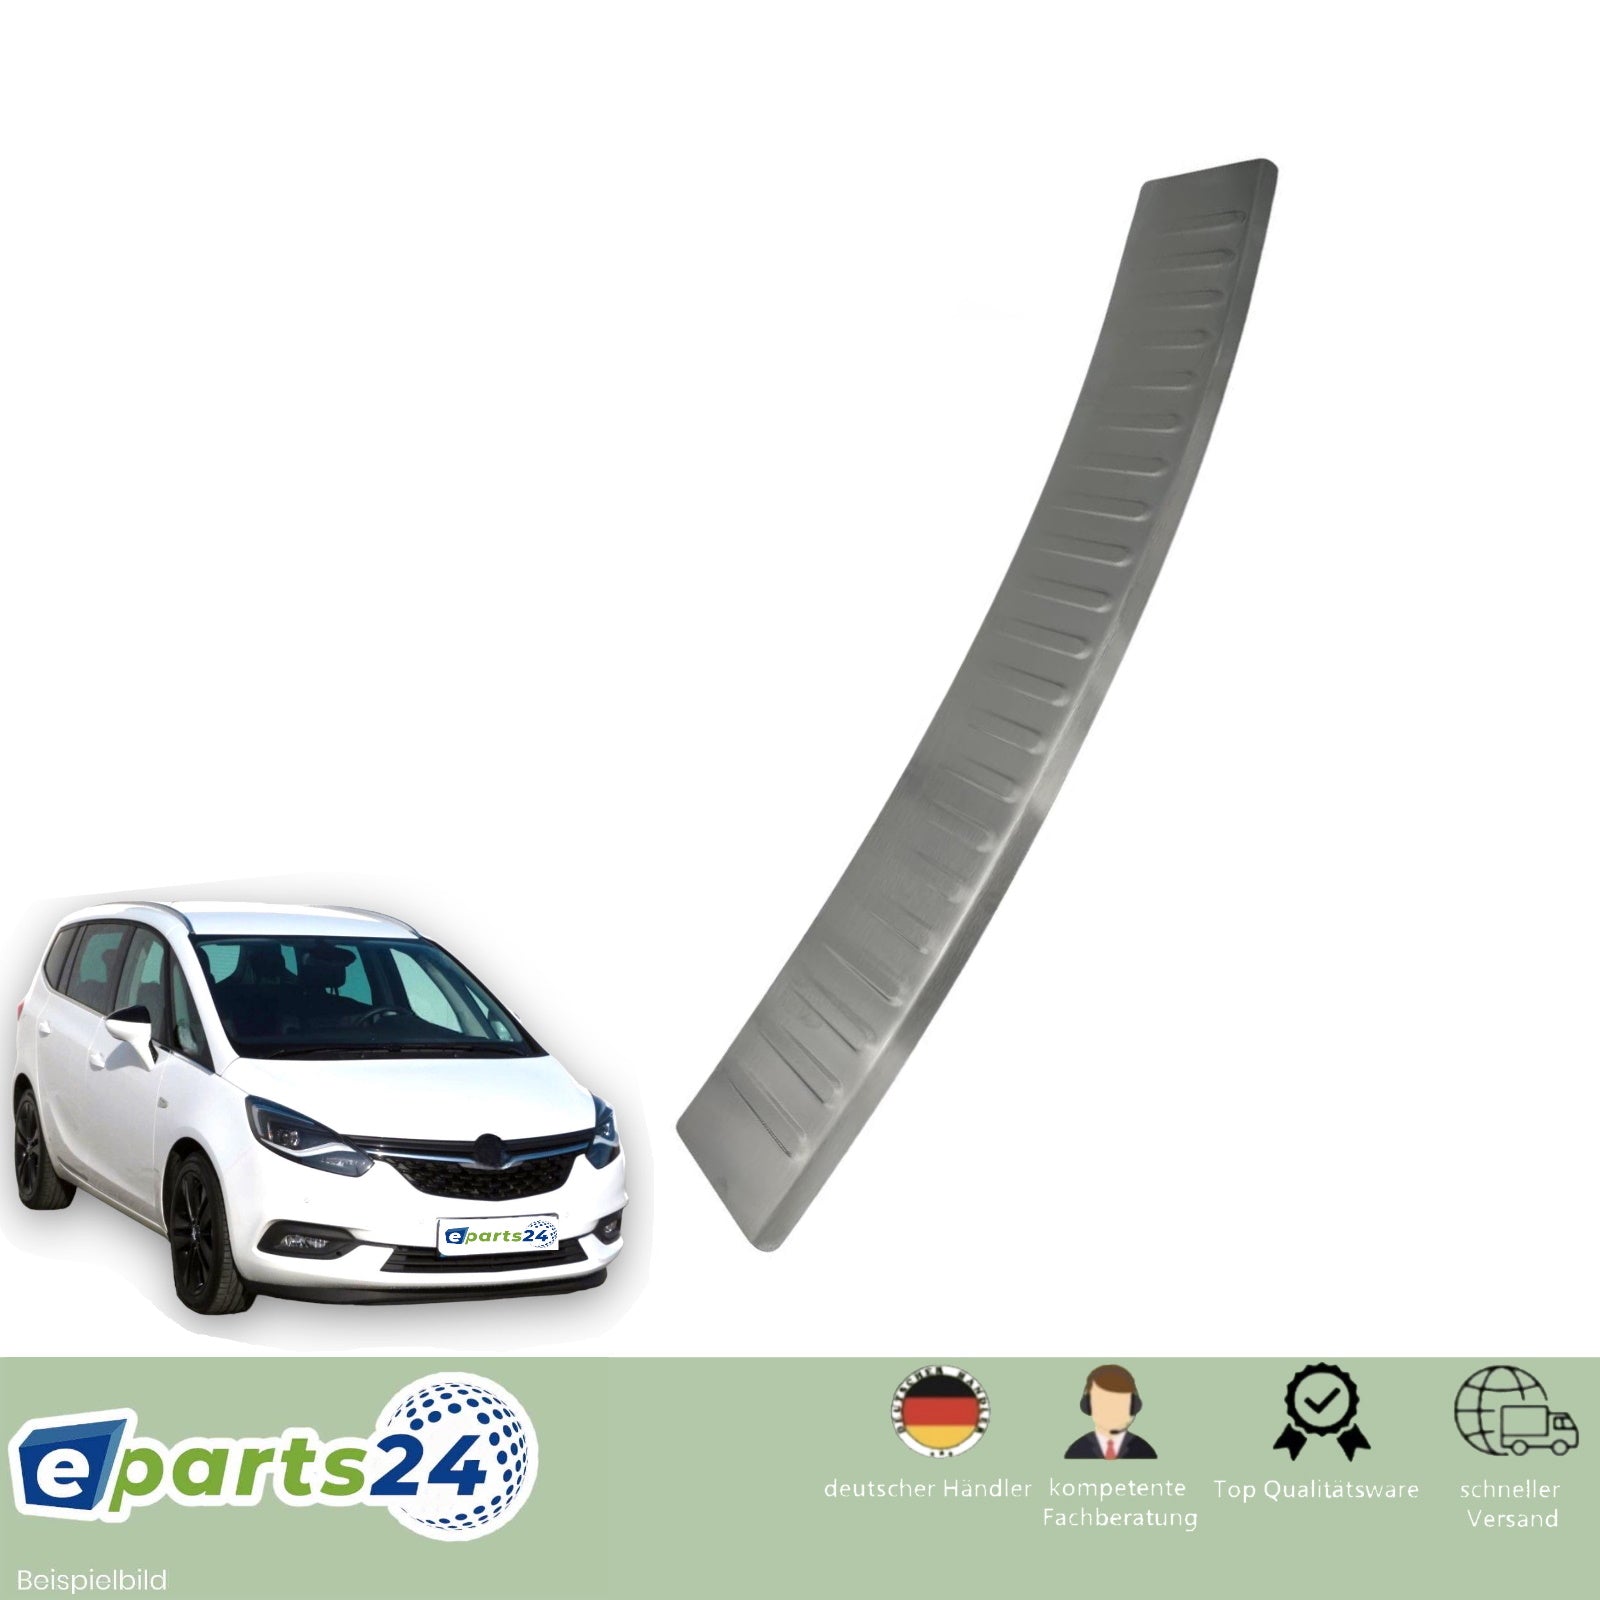 Ladekantenschutz für Opel Zafira Edelstahl E-Parts24 2011-2019 gebürste Tourer – C